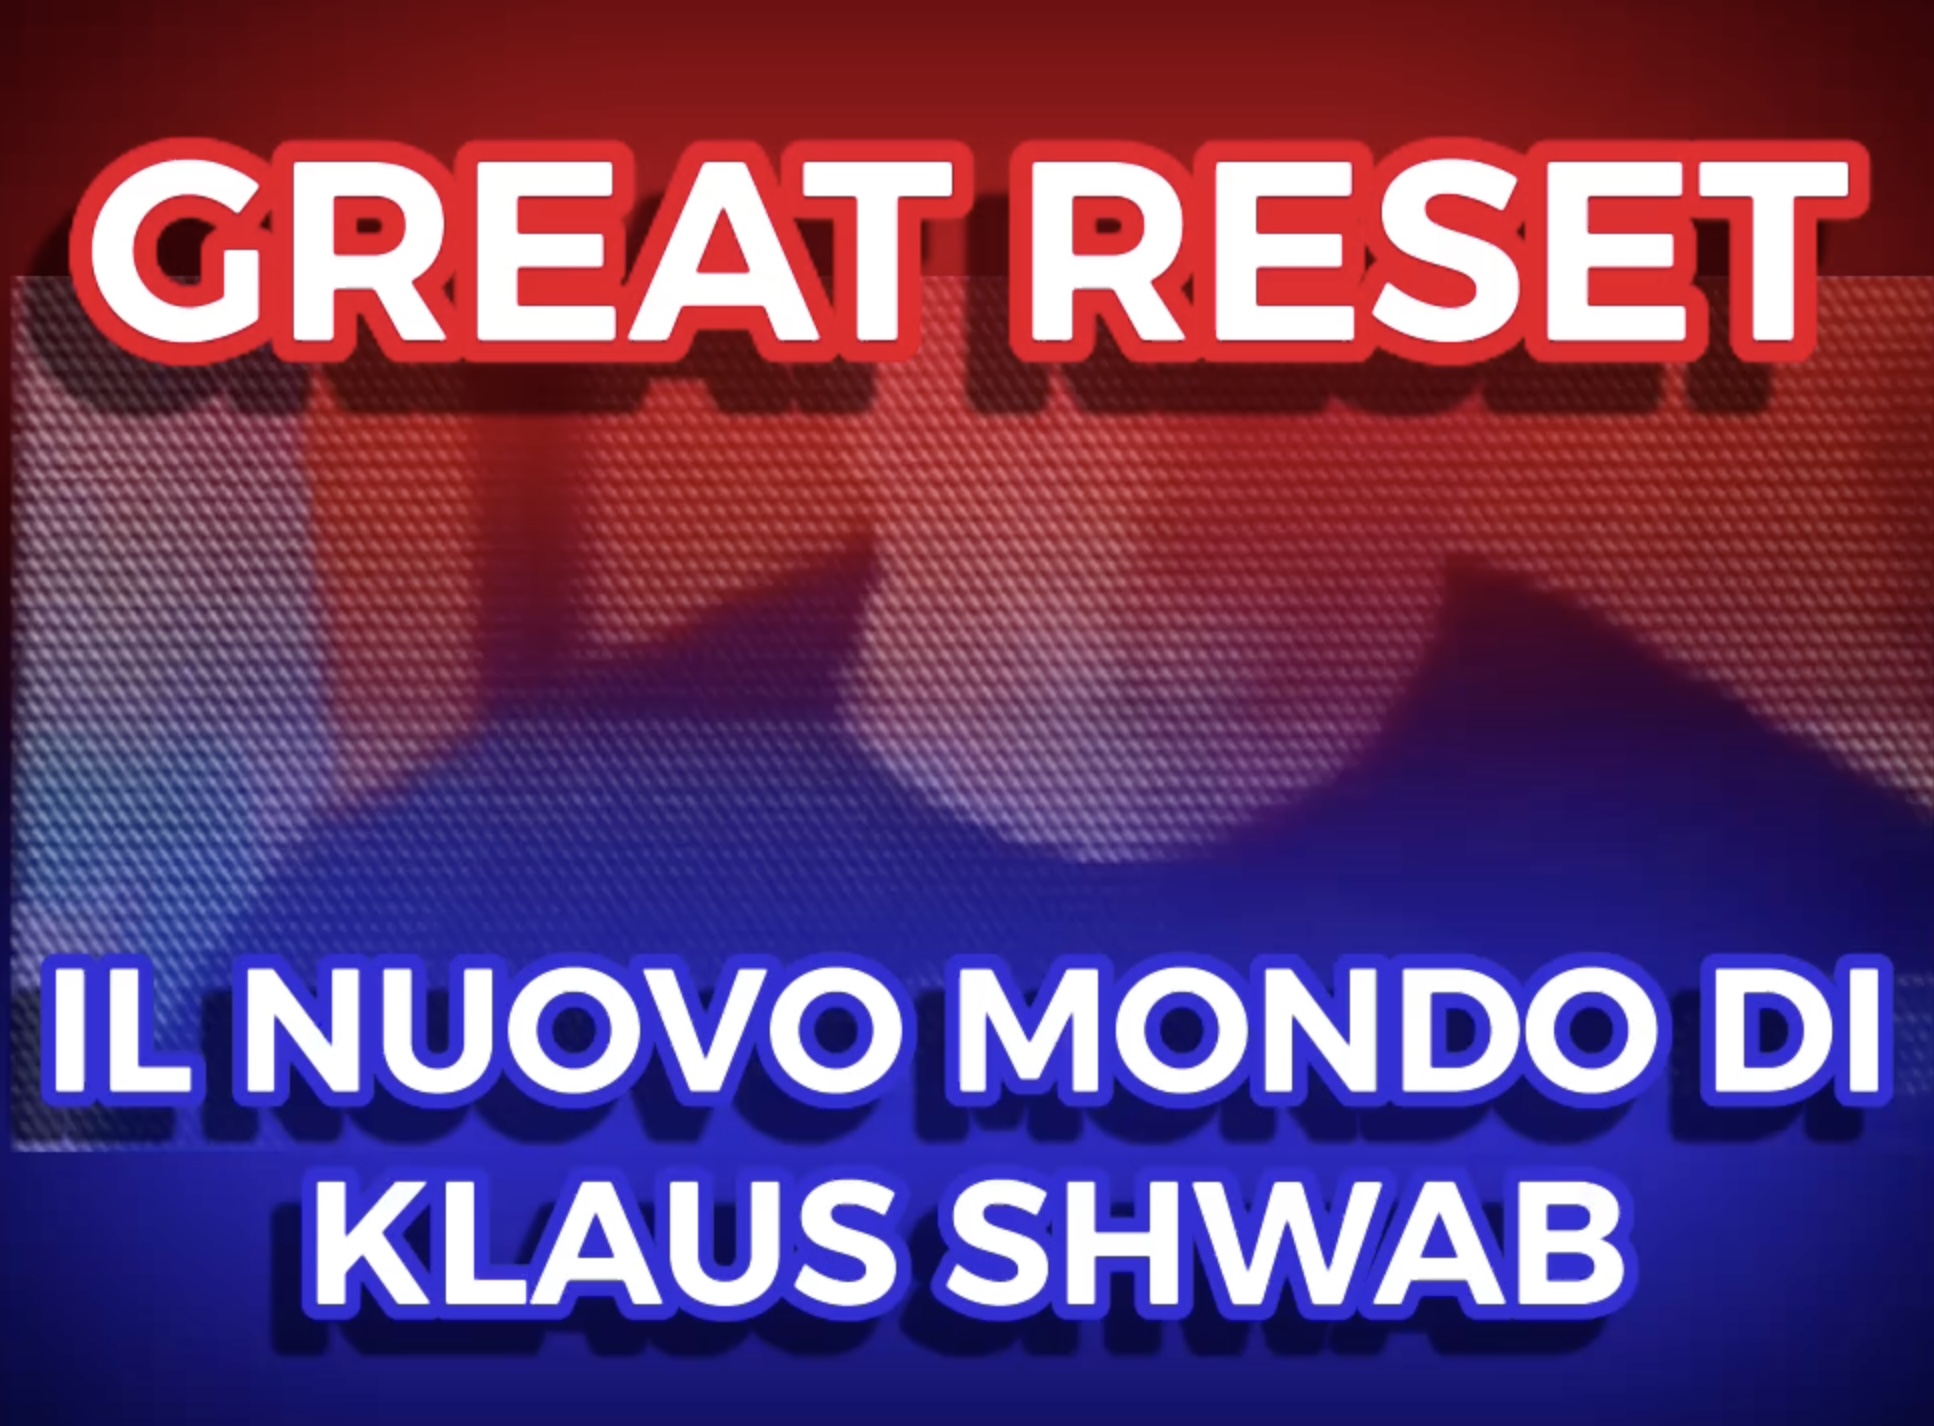 Great Reset - Il Nuovo Mondo di Klaus Shwab